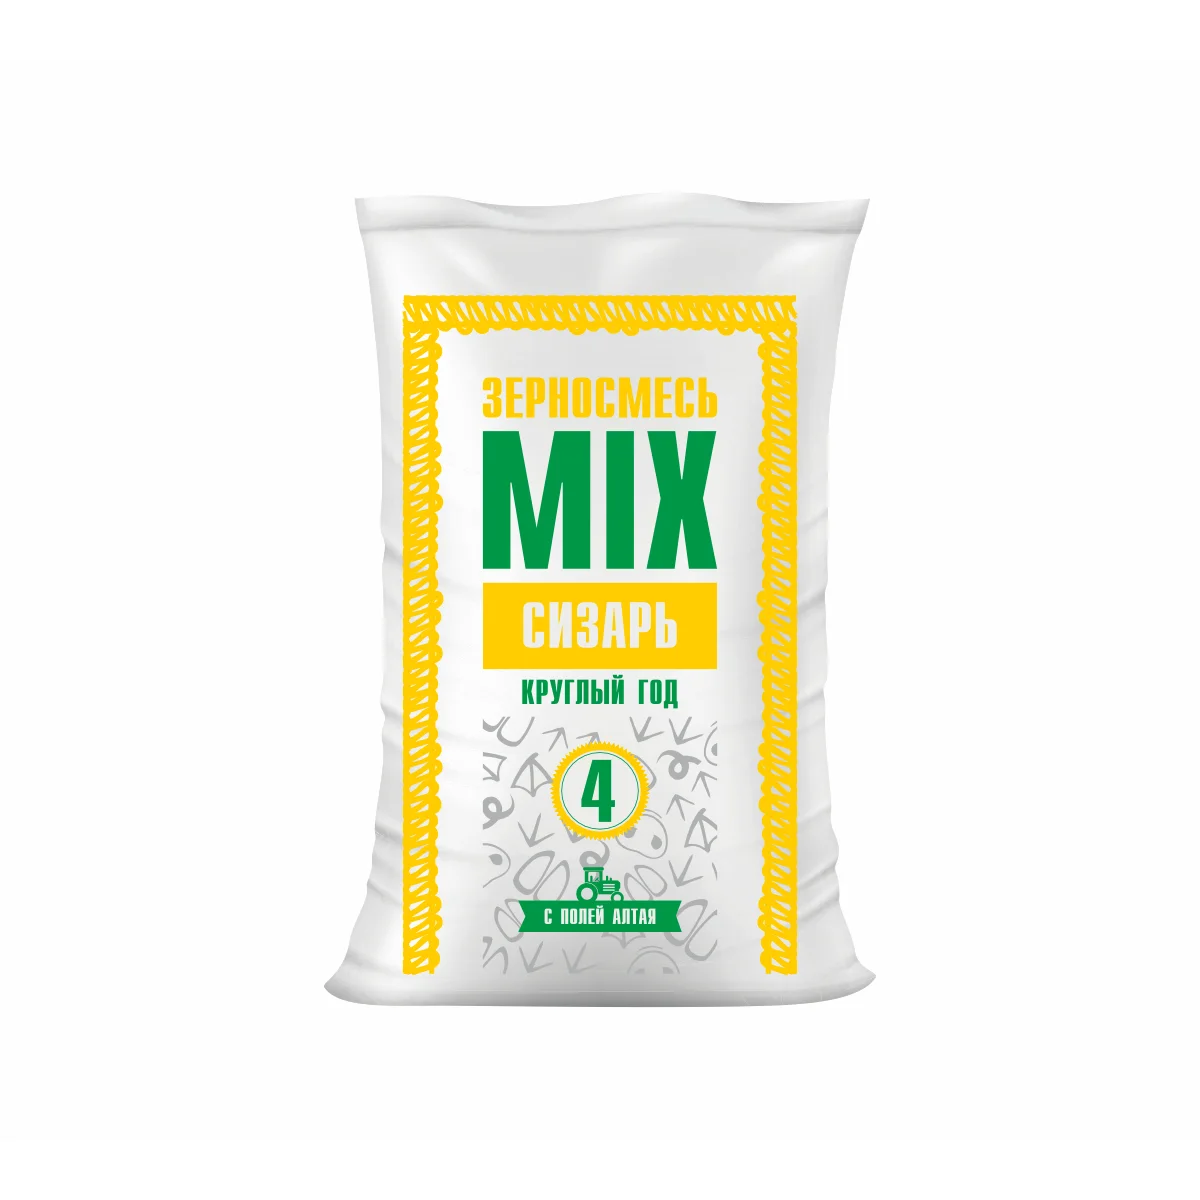 Grain MIX MIX 4 SIZAR (30 kg)